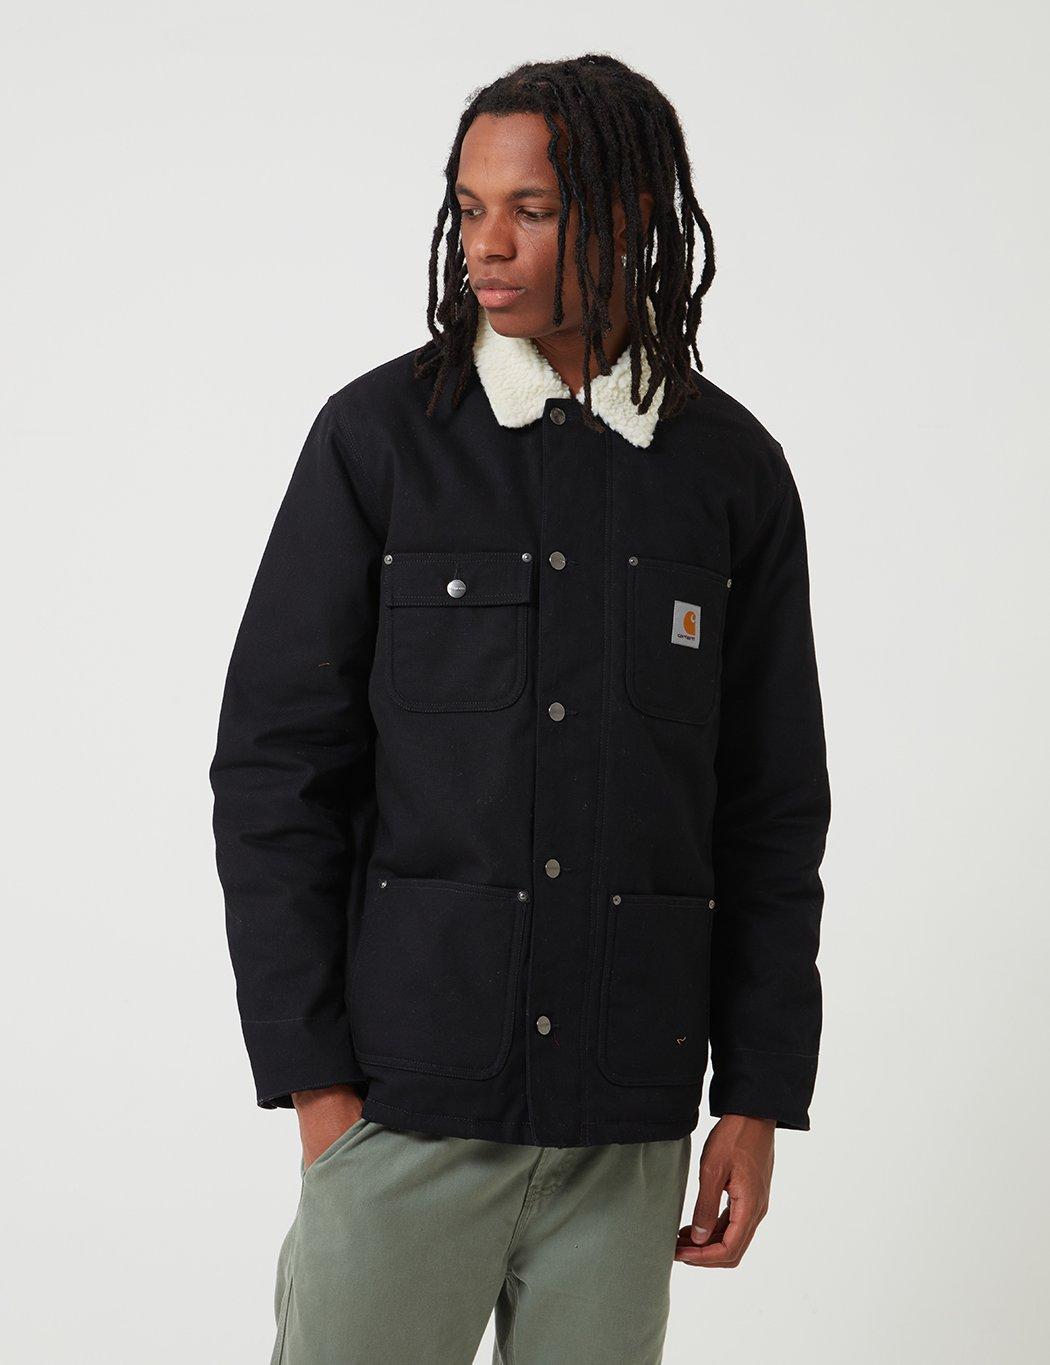 Carhartt Cotton Wip Fairmount Coat in Black for Men - Lyst